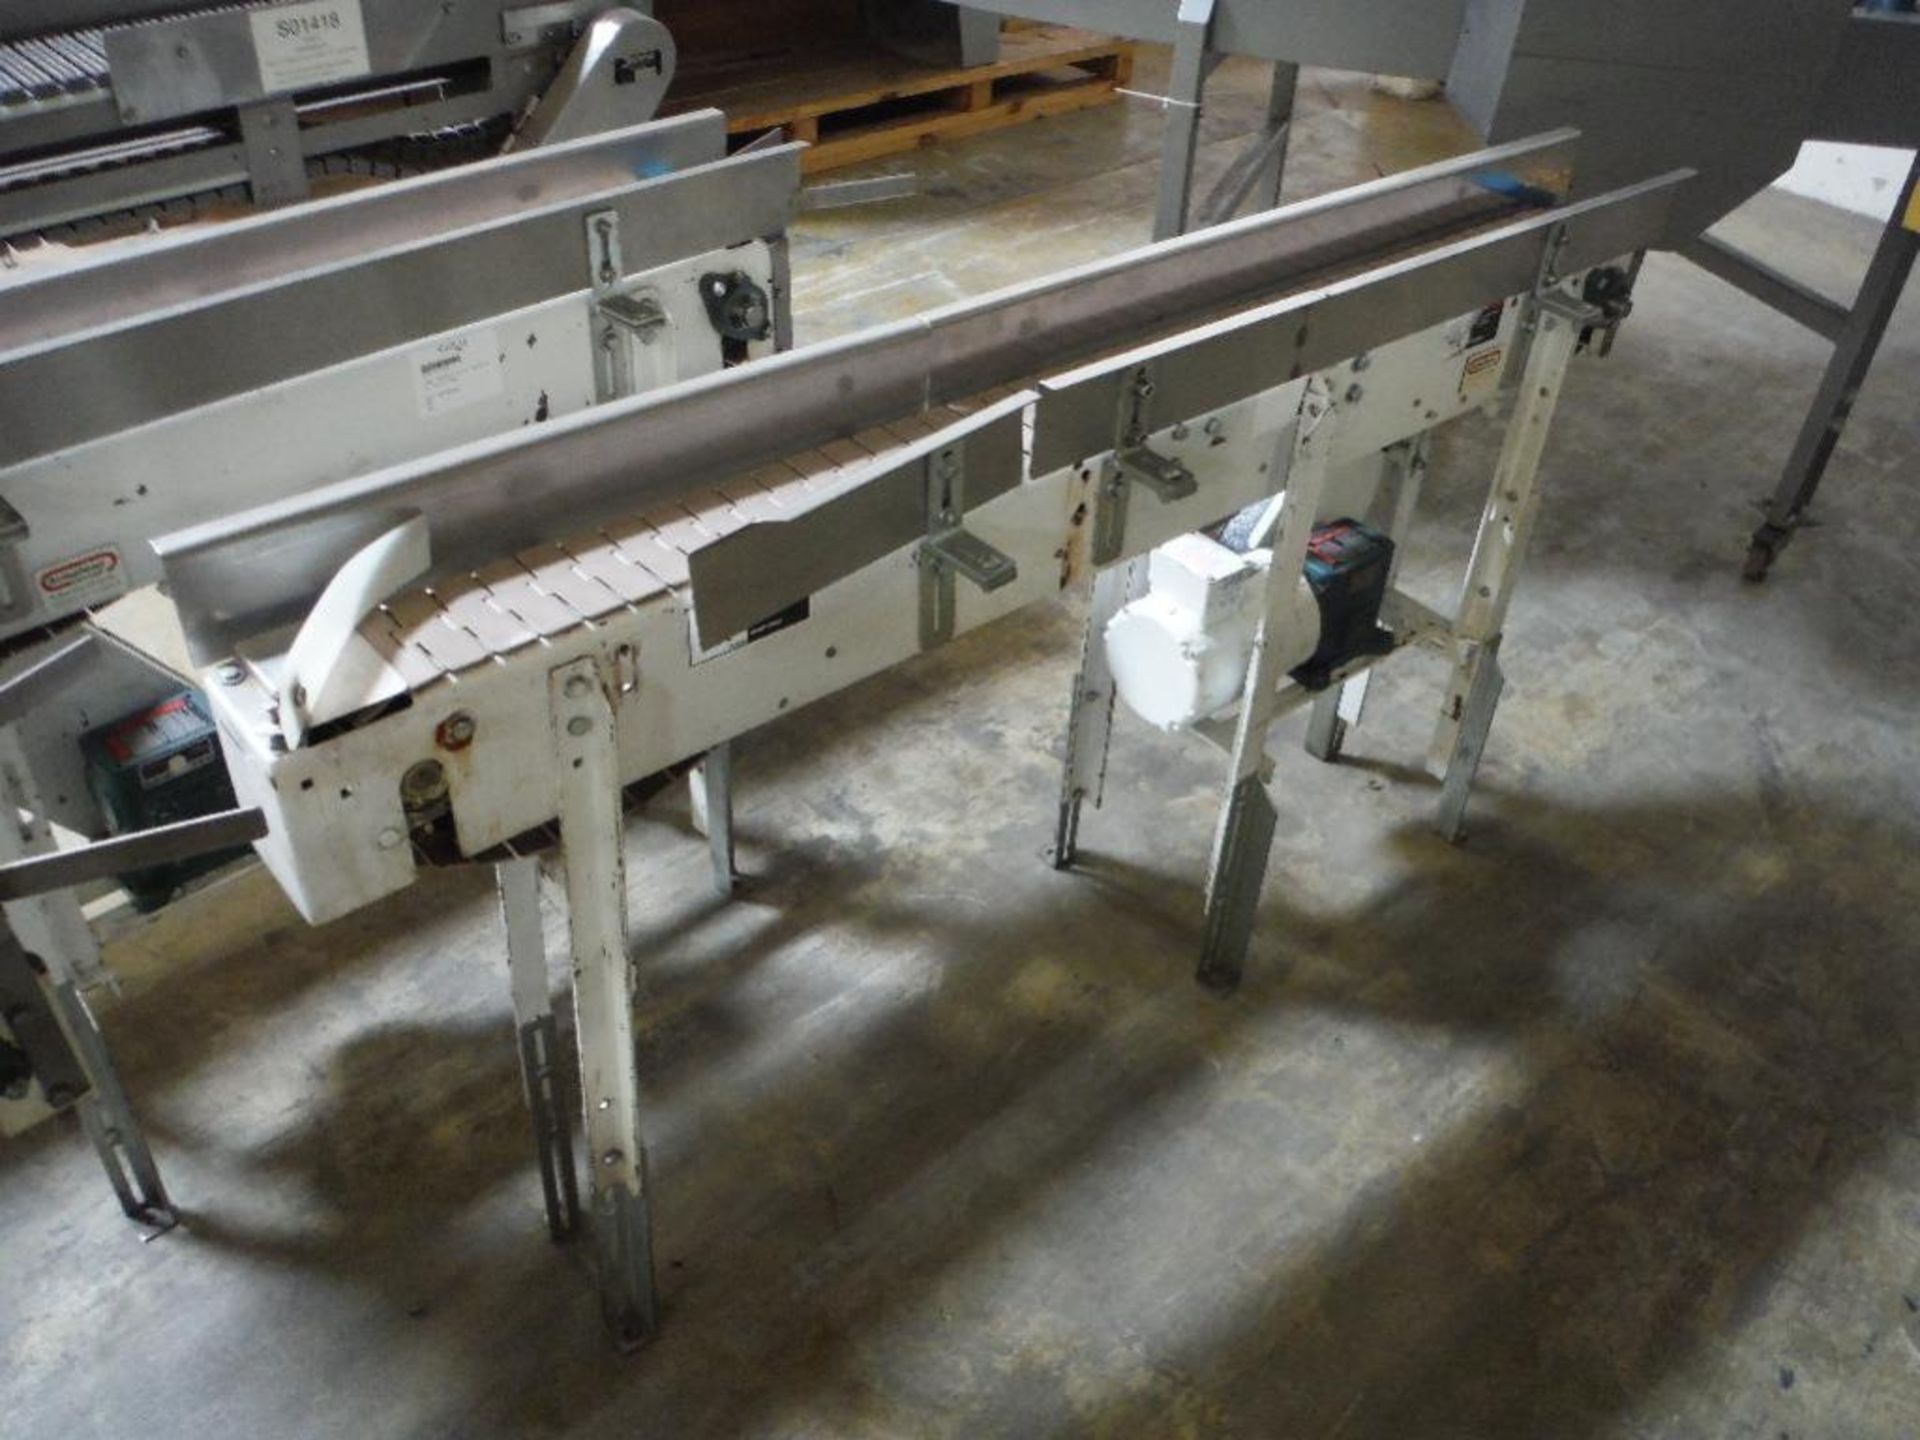 Arrowhead conveyor, 72 in. long x 5 in. wide x 35 in. tall, table top belt, carbon steel frame, has